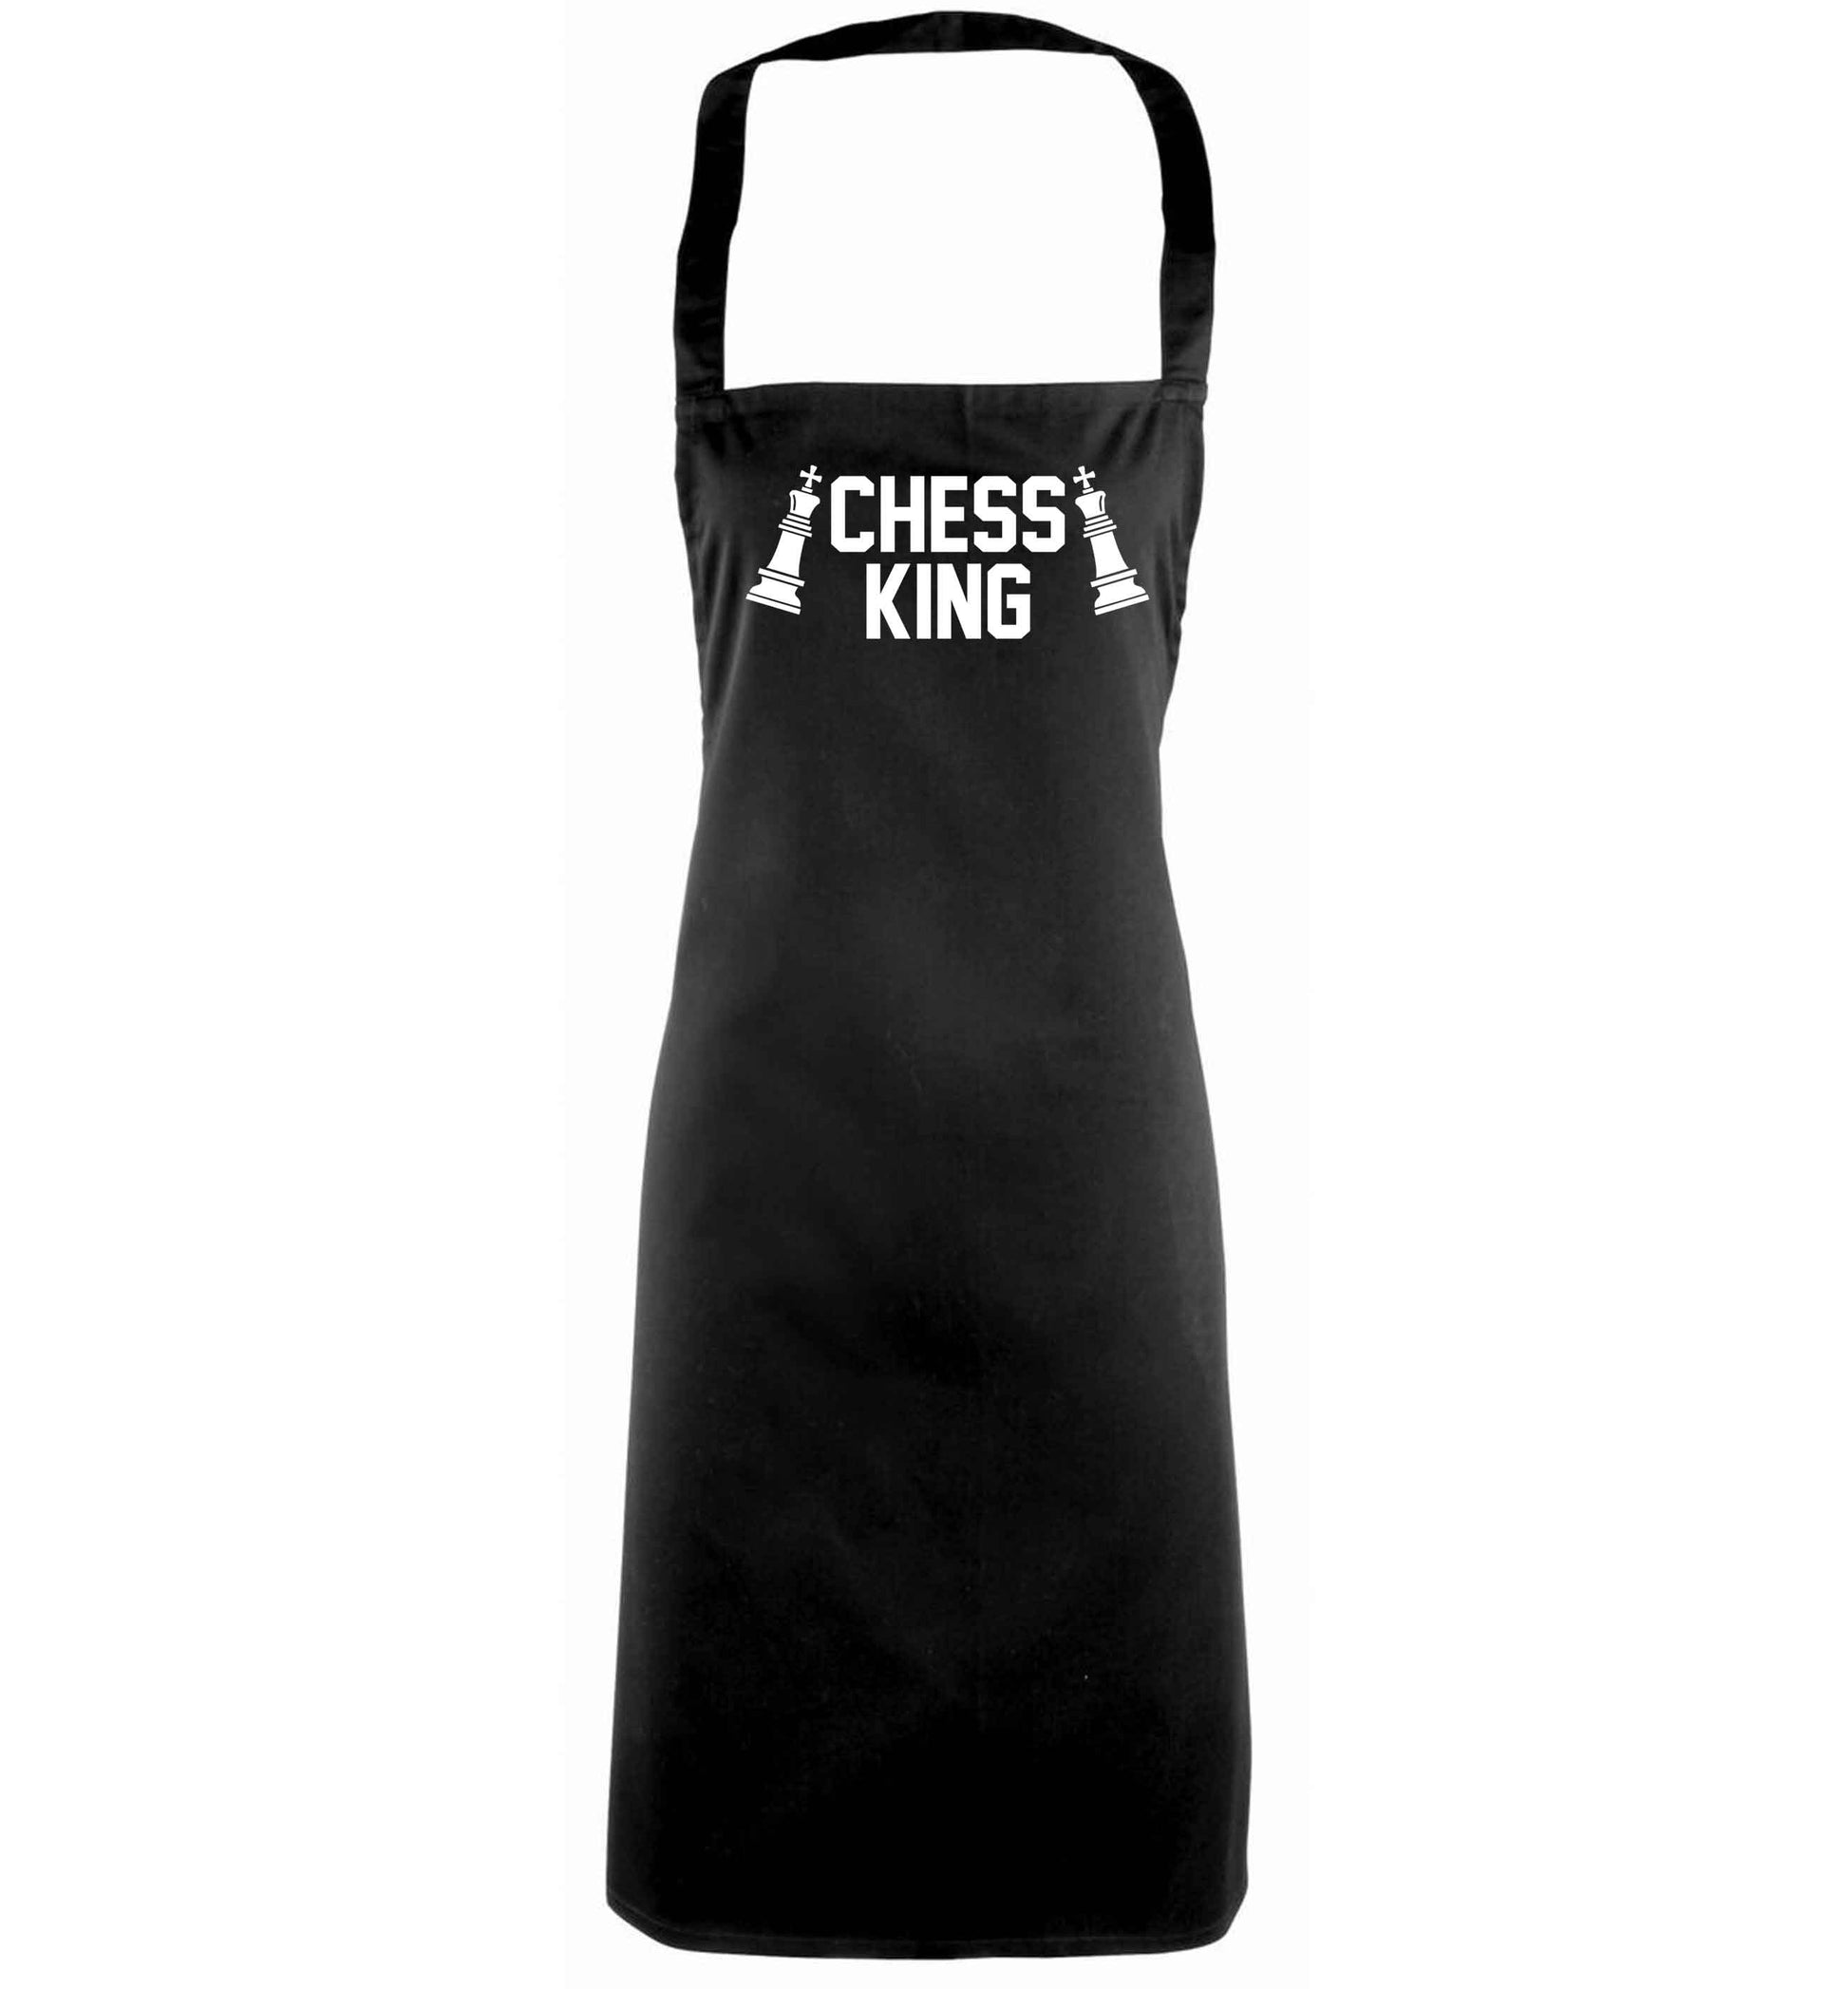 Chess king black apron